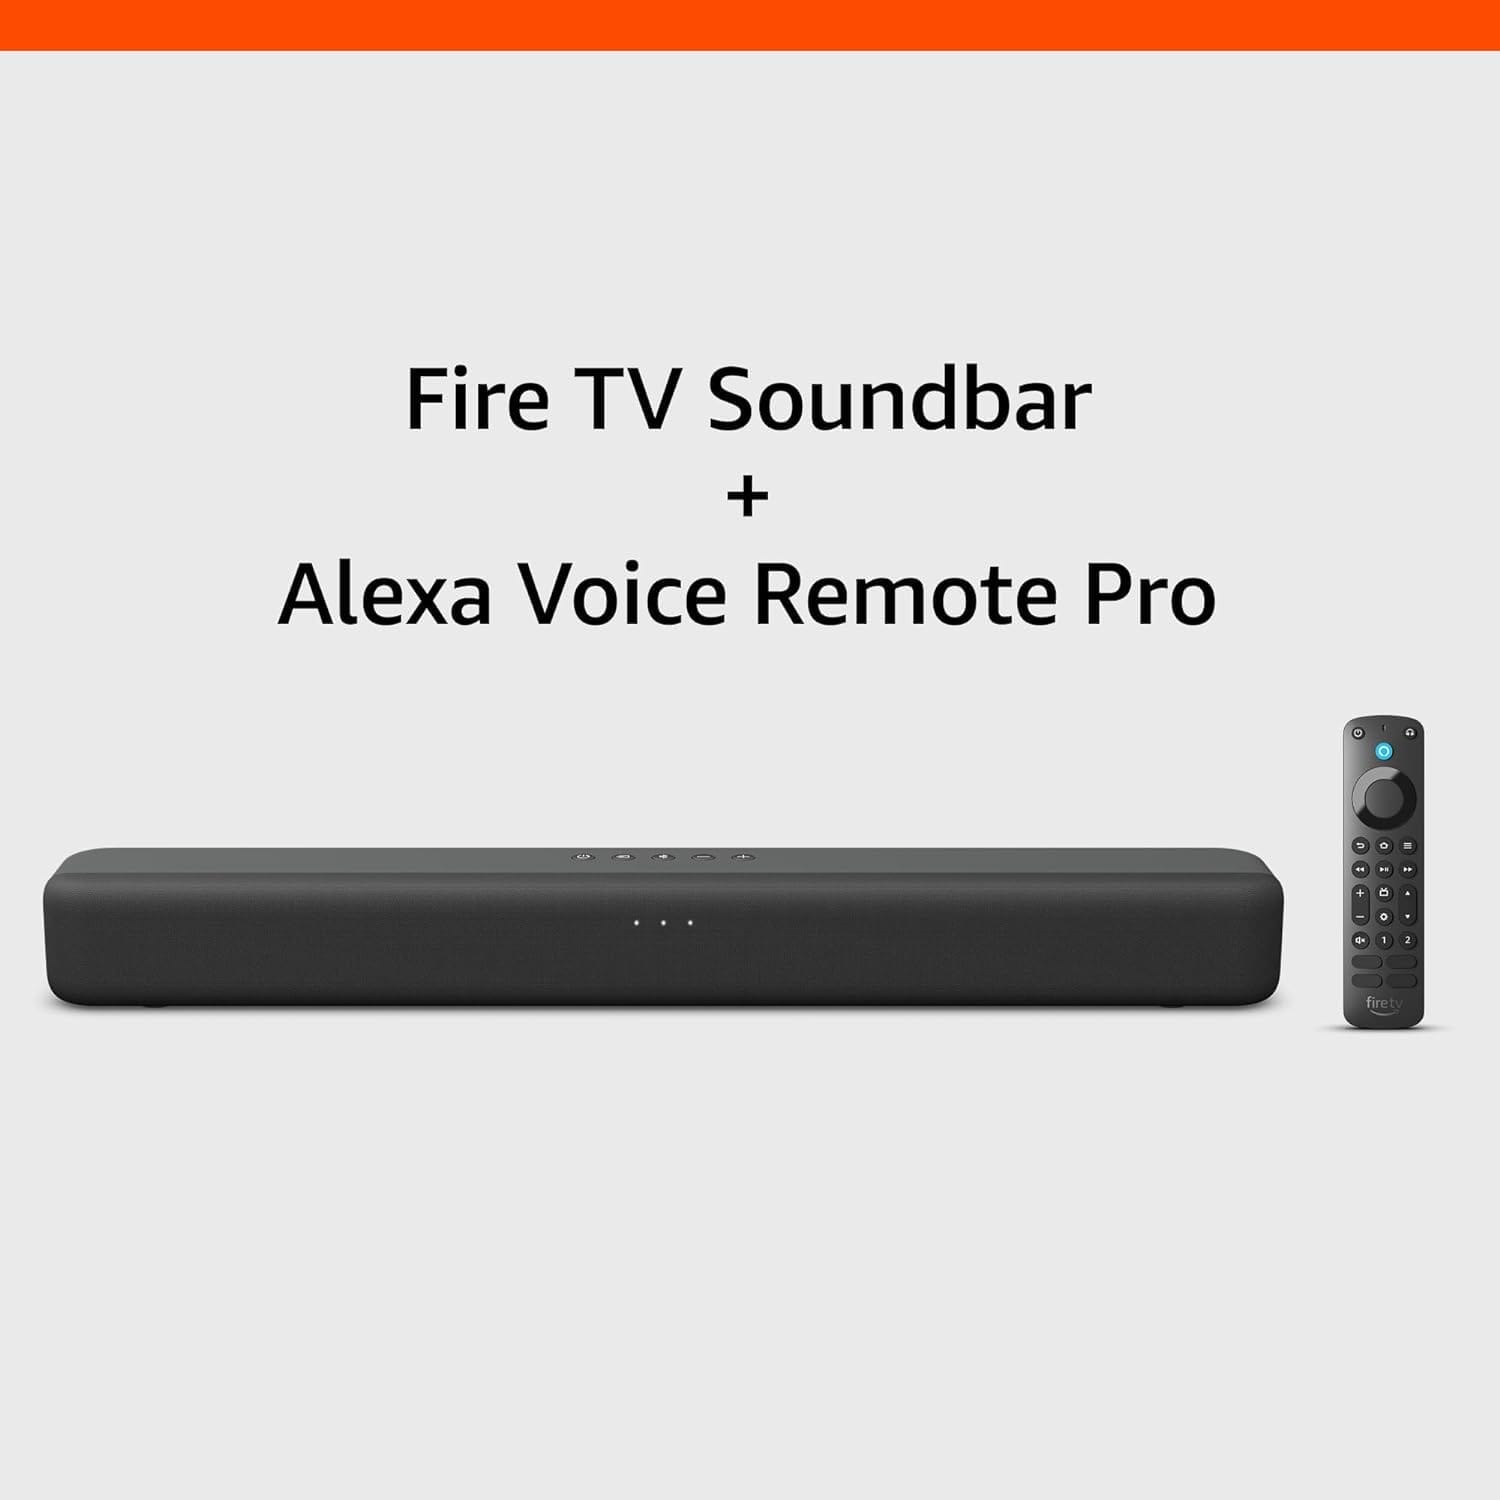 Amazon Fire TV Soundbar with Alexa Voice Remote Pro Review